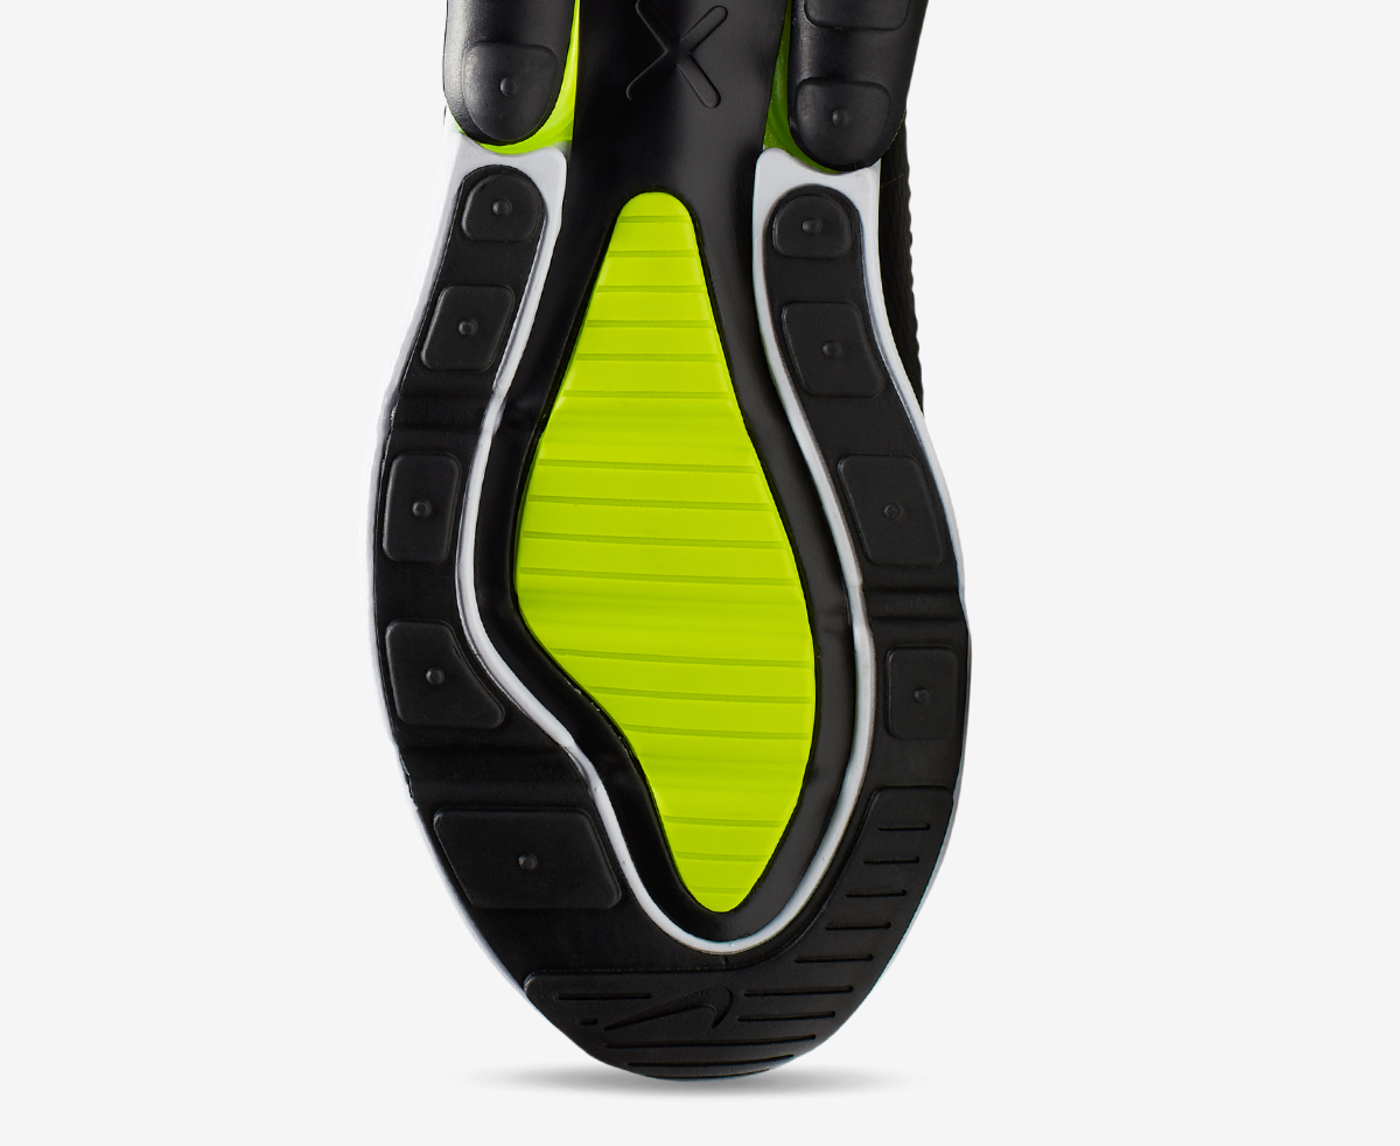 Nike Air Max 270 React ENG Blackened Blue/Green Strike - CJ0579-400